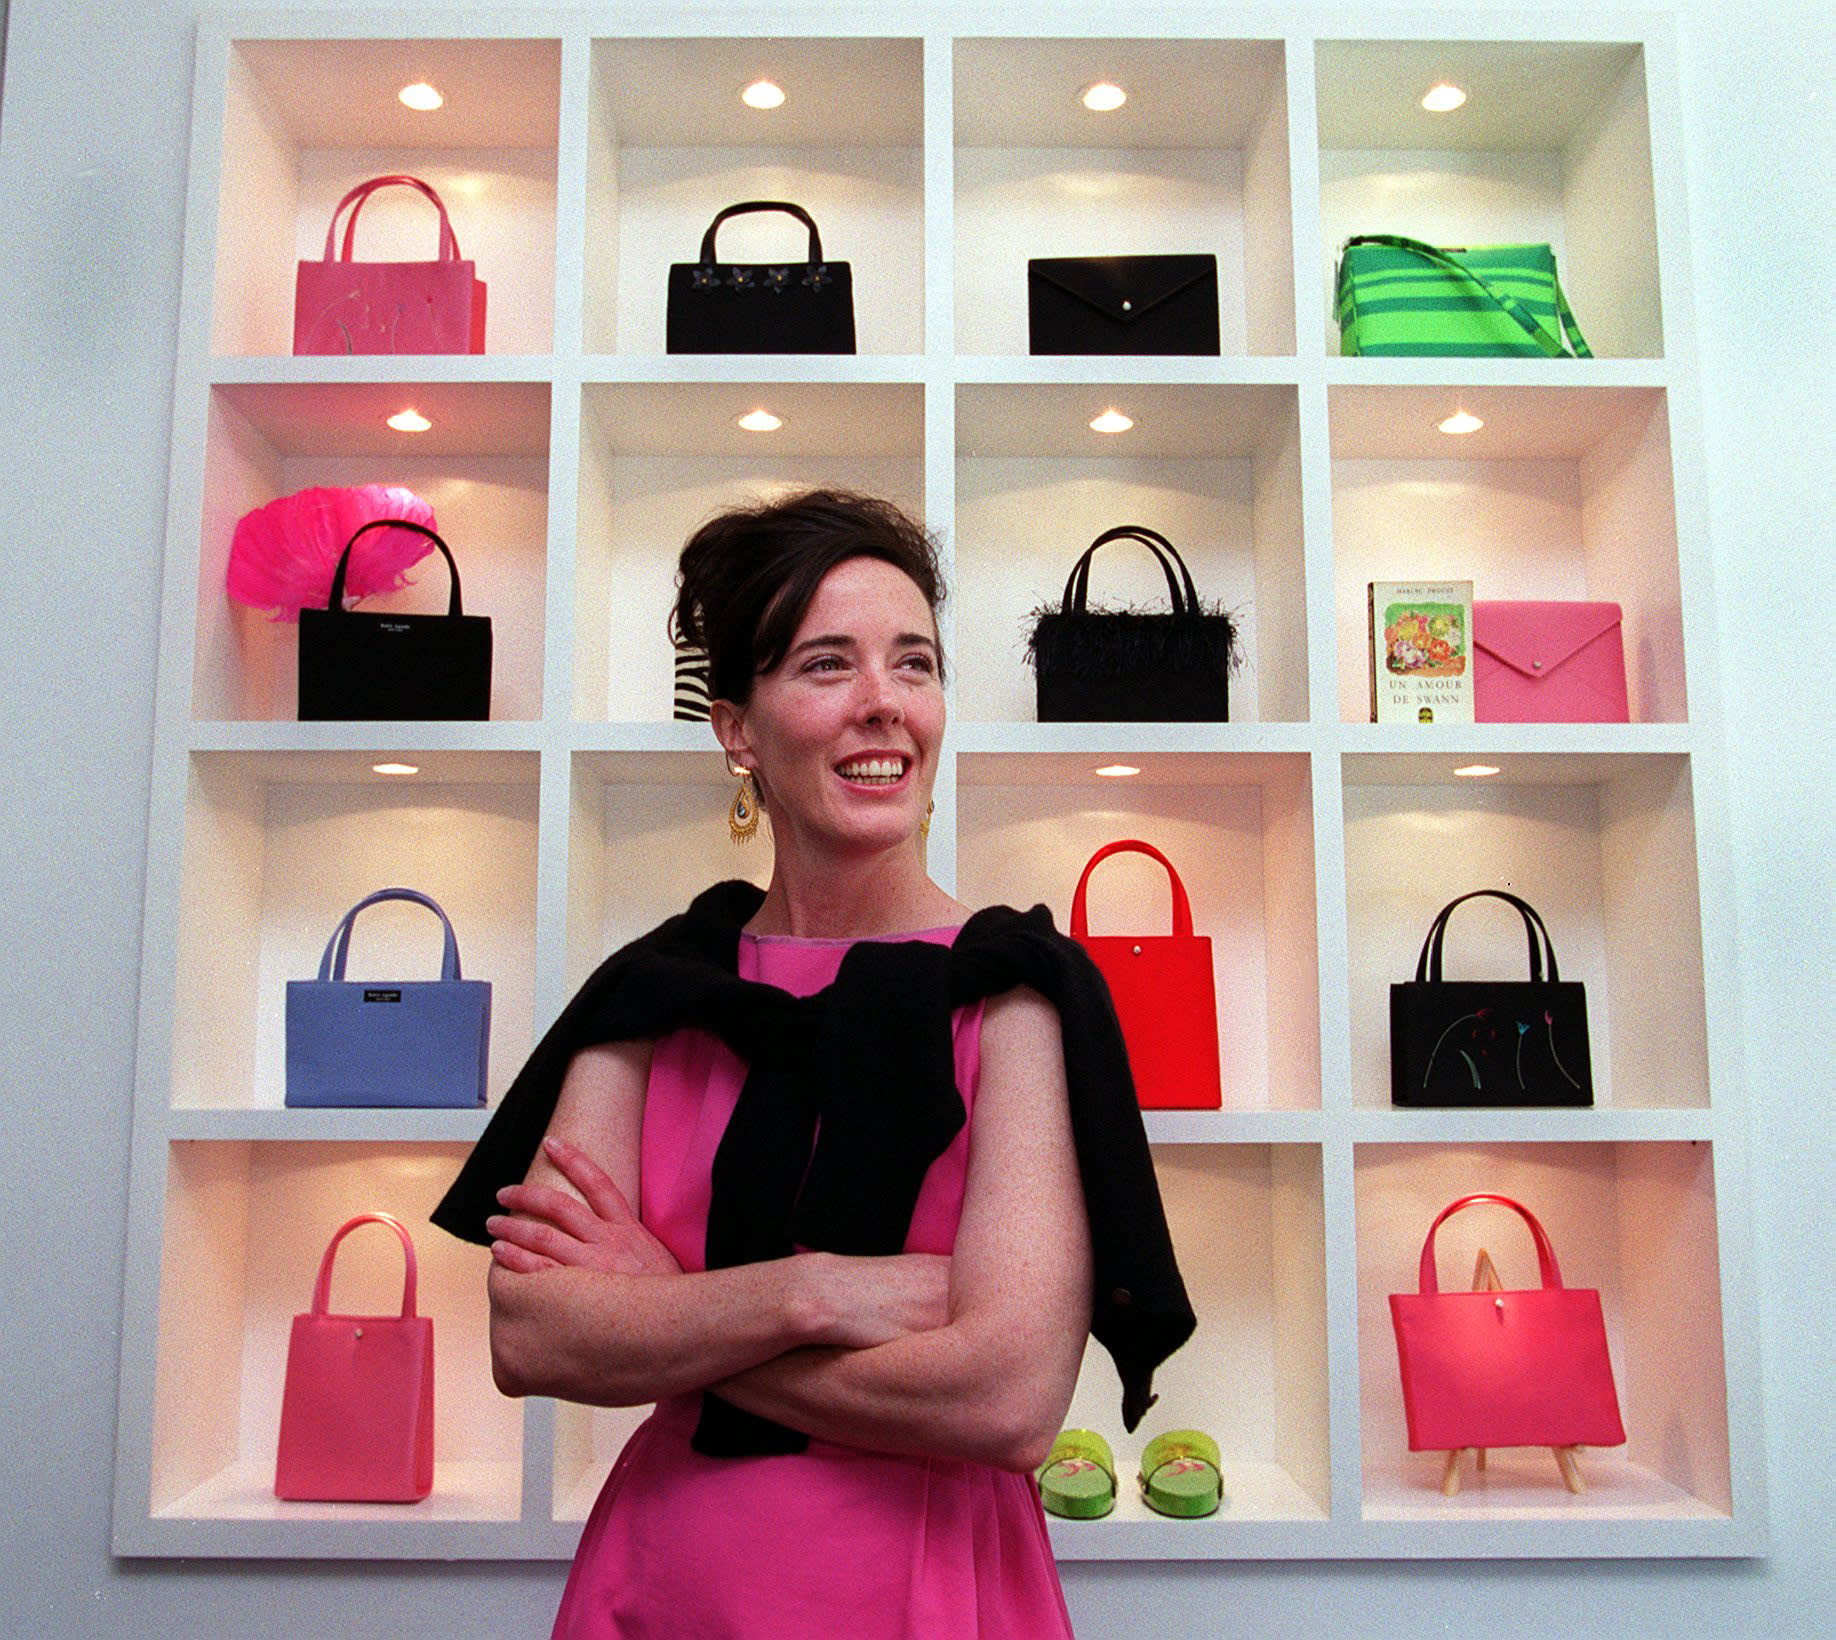 Handbags shop display ideas for interior design